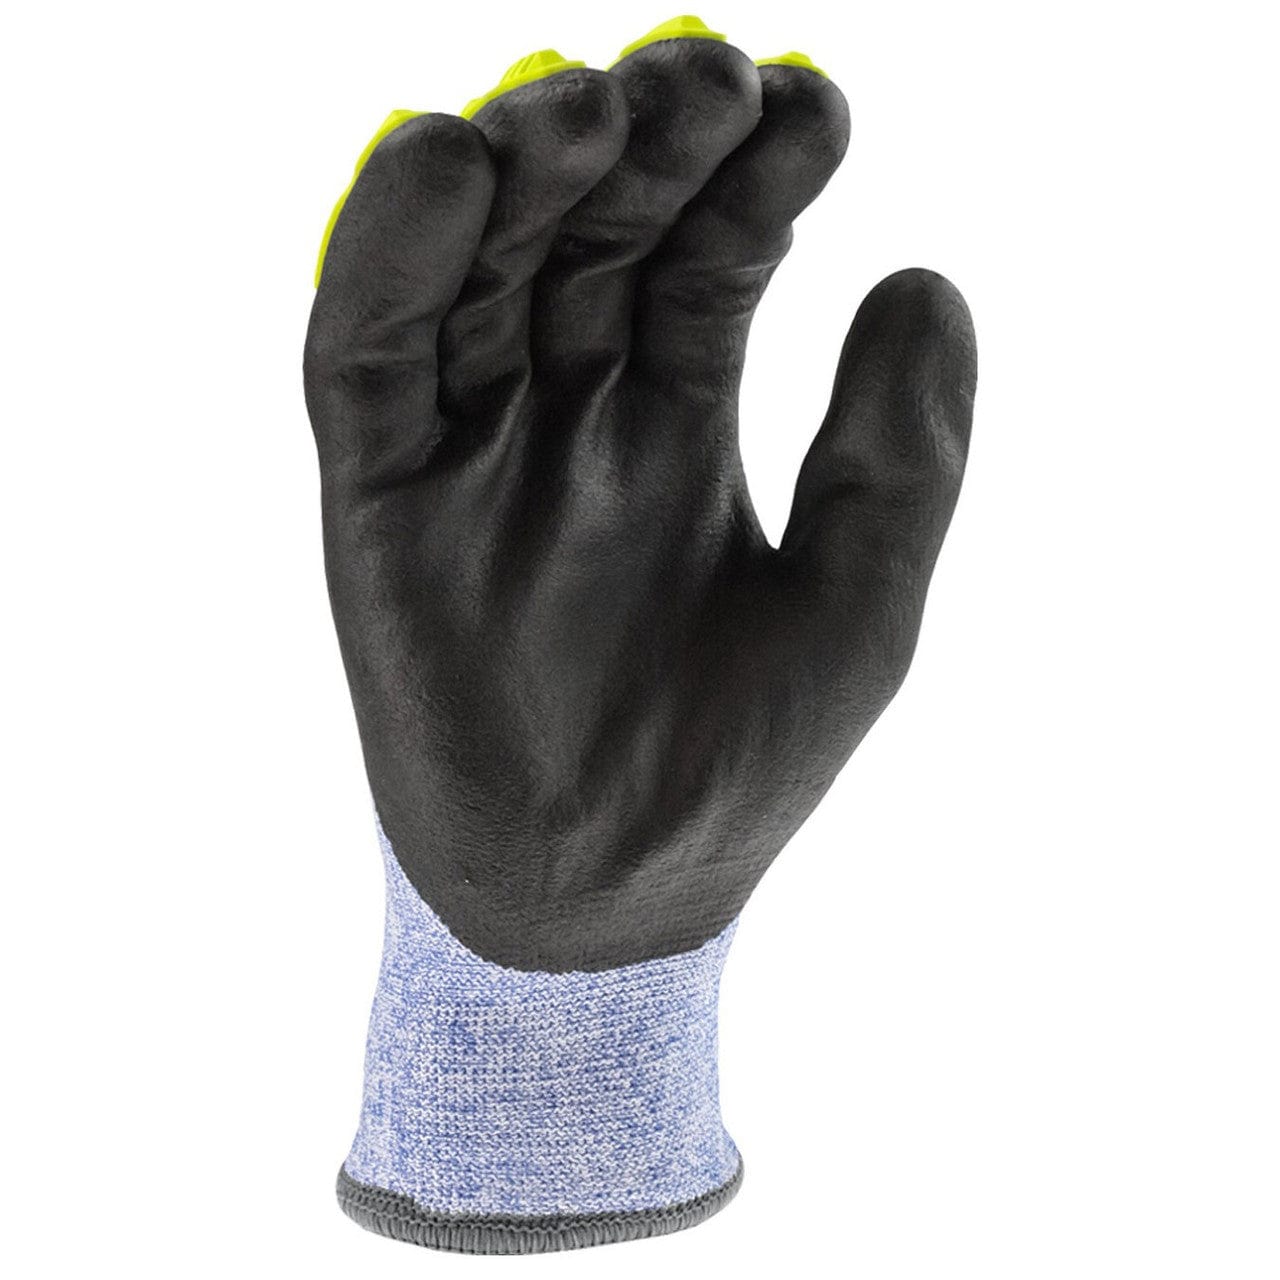 A2 Cut Resistant High Dexterity Gloves - Walker's